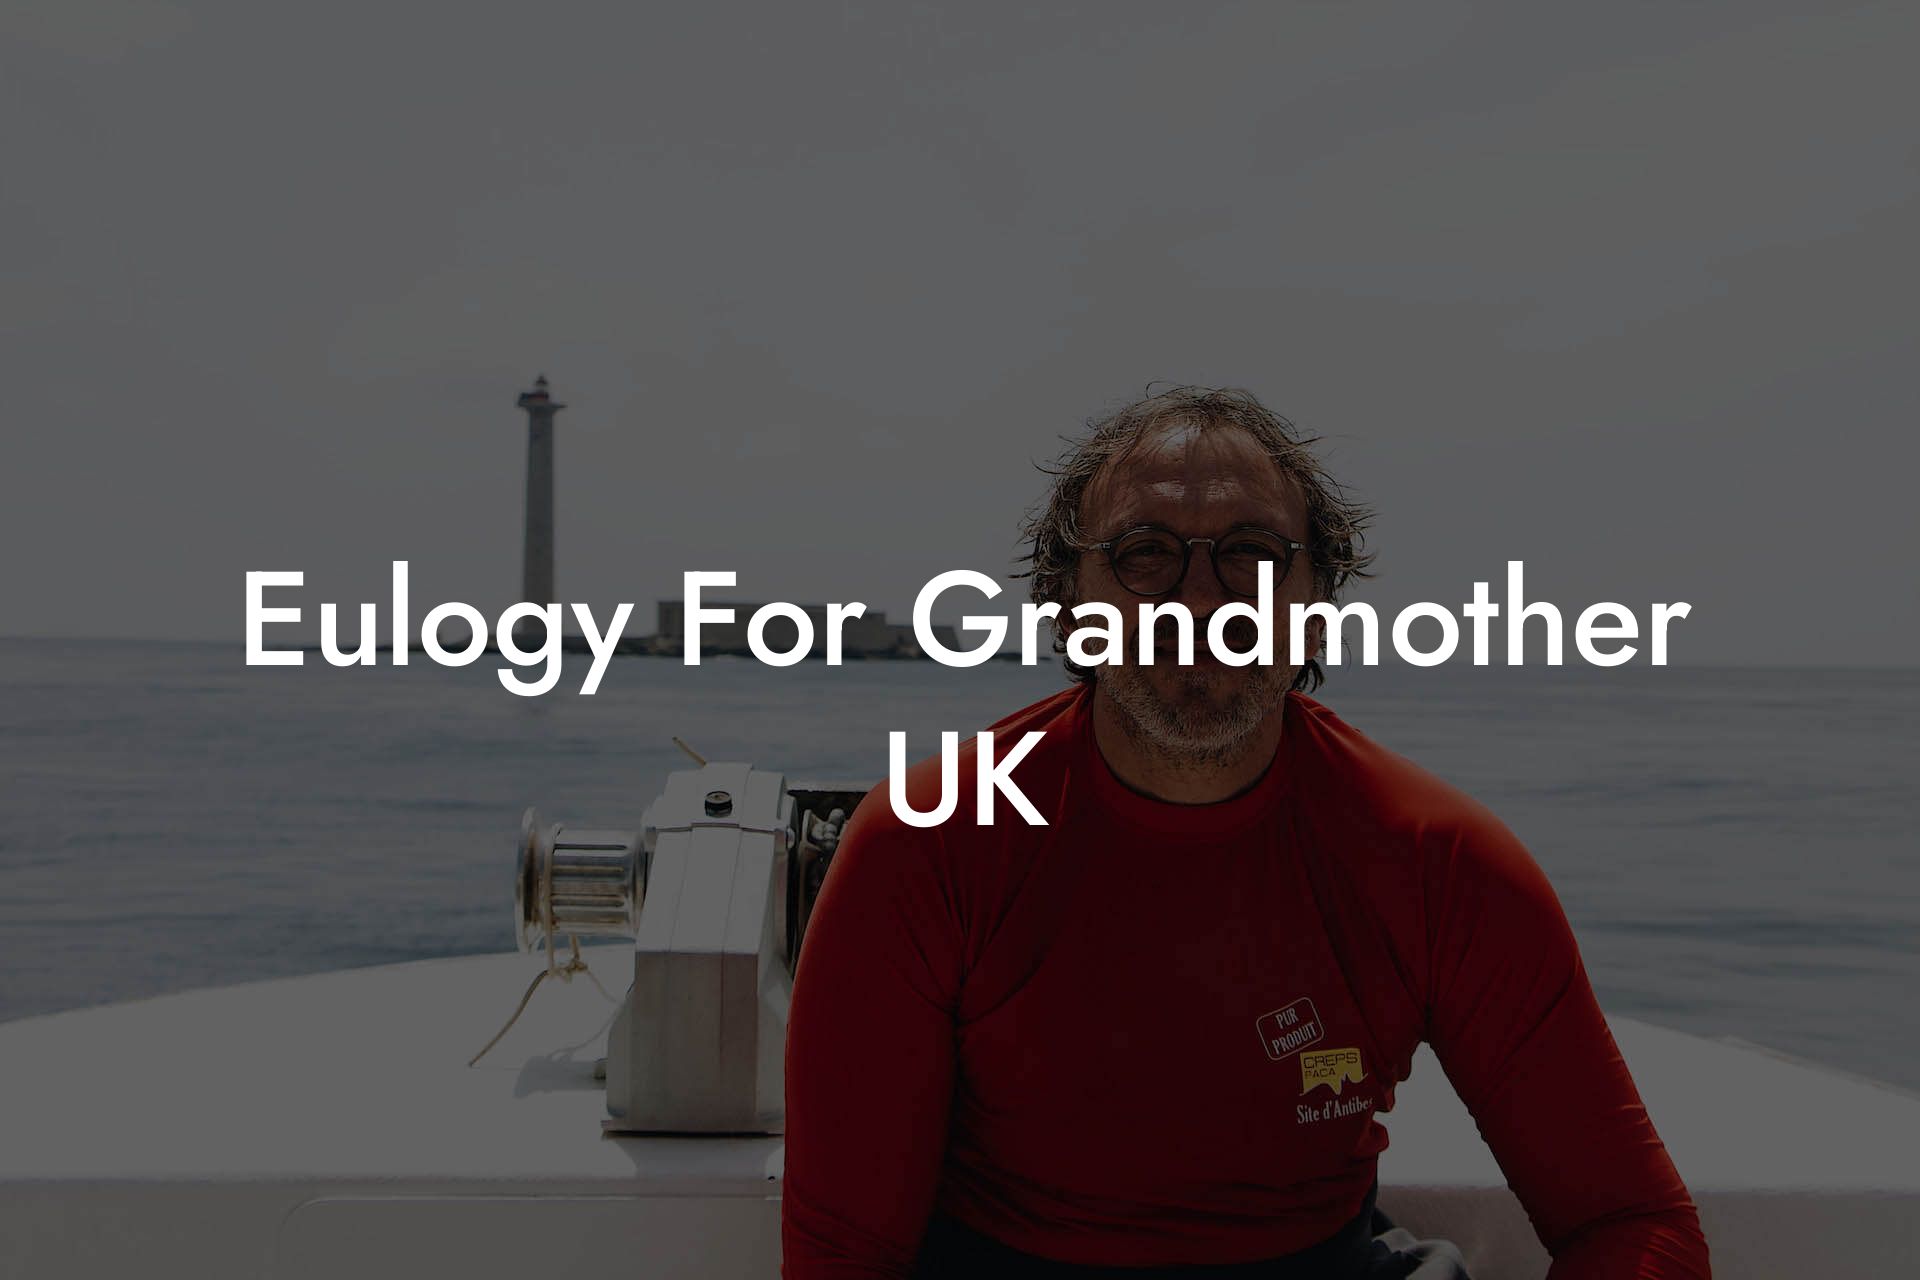 Eulogy For Grandmother UK